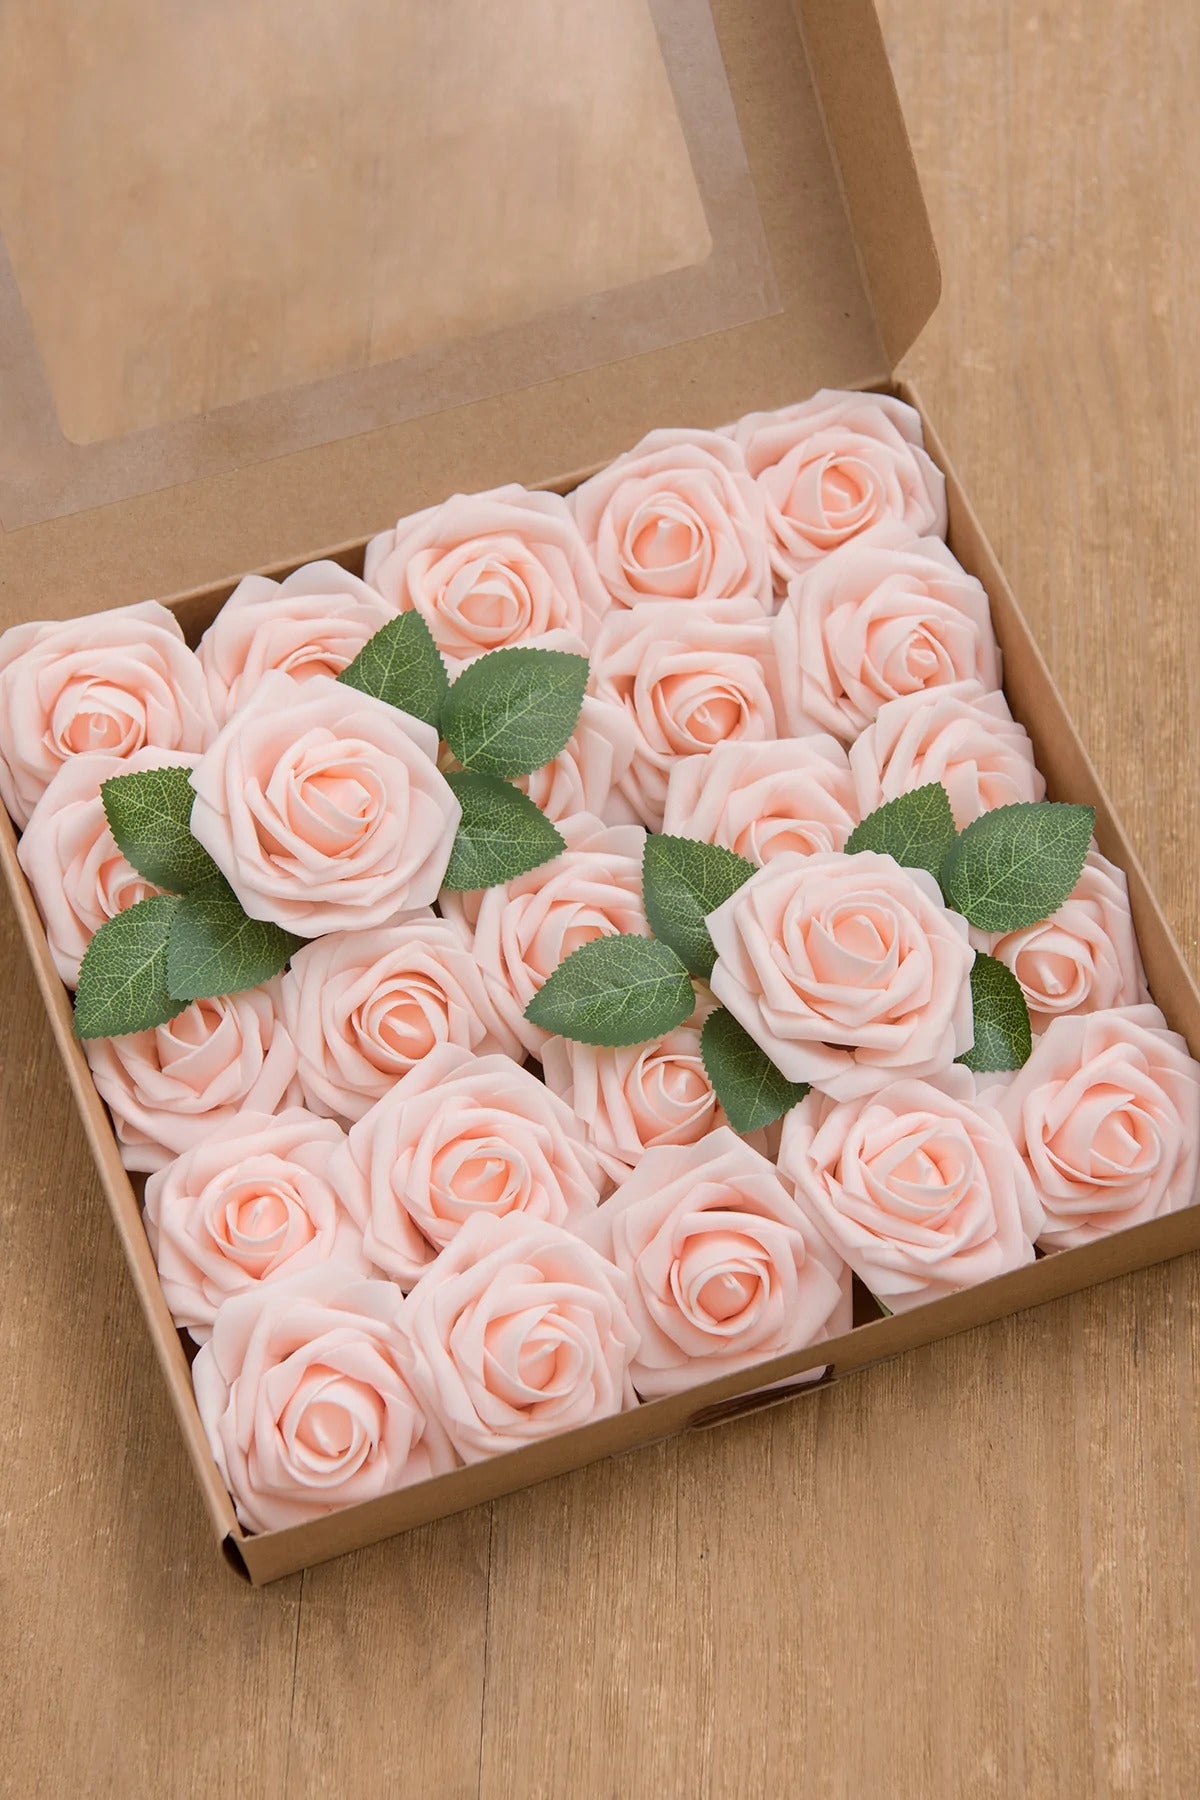 Box of 50: Artificial Rose Flower Picks, 8 Long